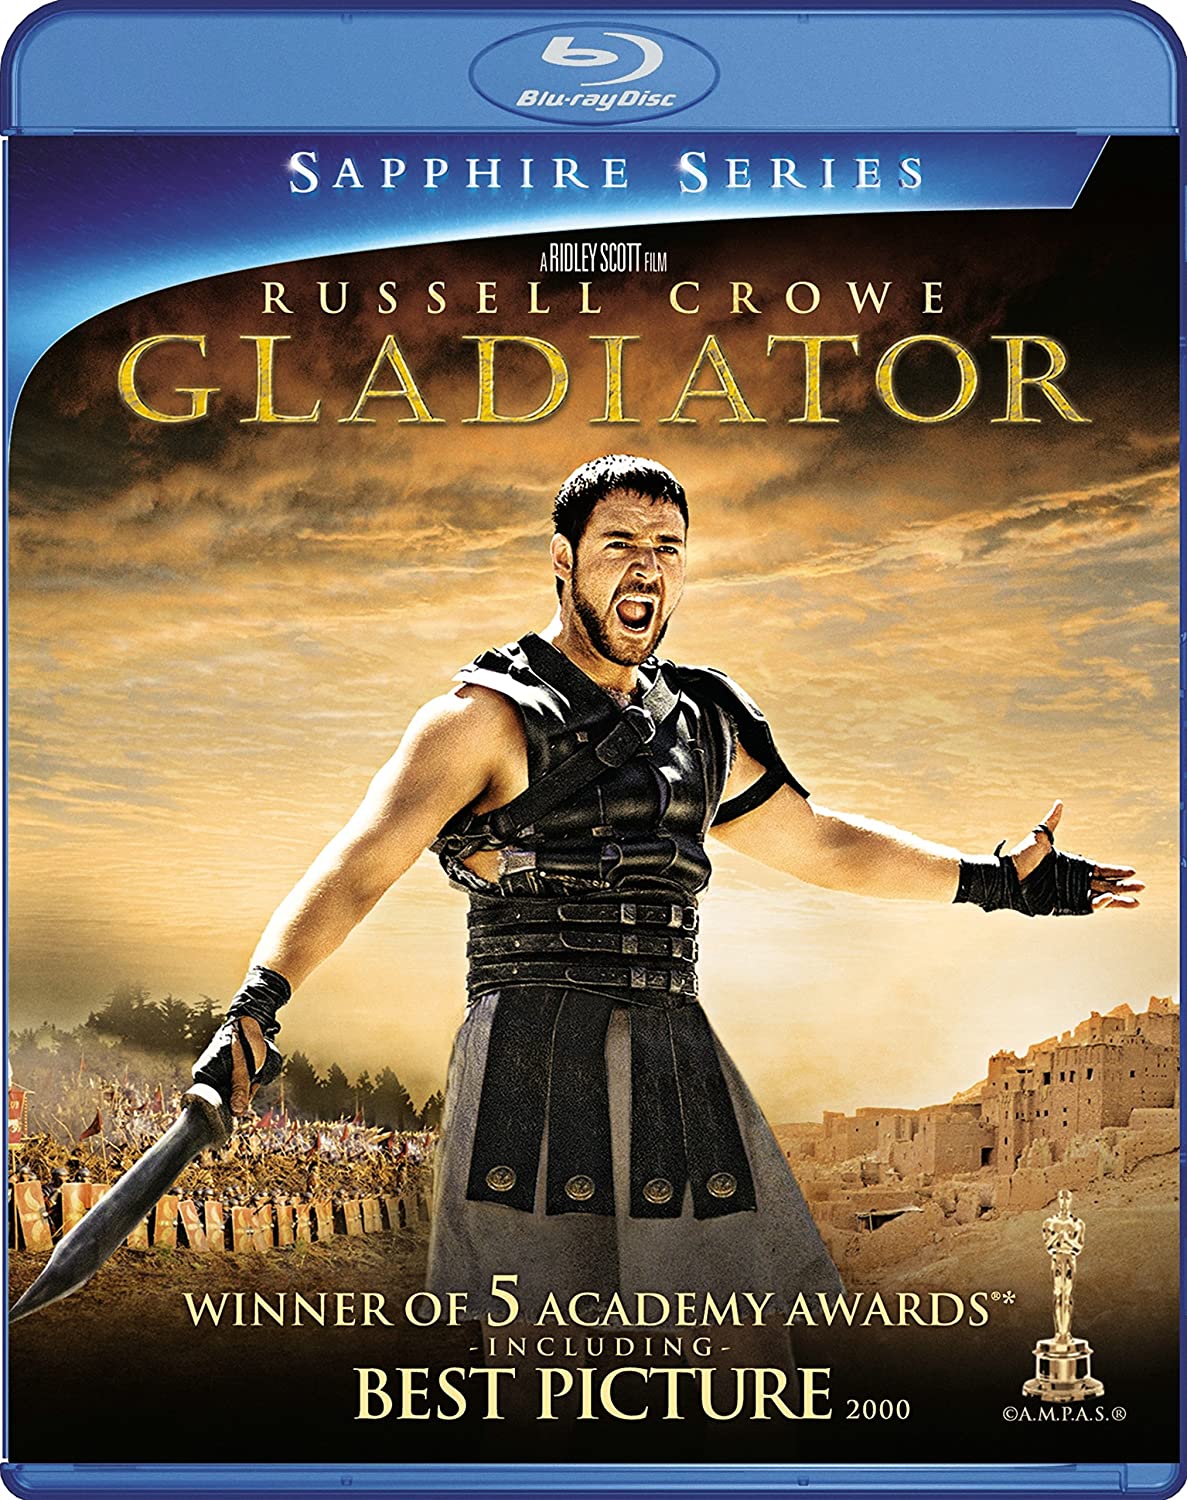 Stiahni si Filmy CZ/SK dabing Gladiator - Gladiator Extended (2000)(Remastered)(SE)(BluRay)(1080p)(2xCZ-2xEN) = CSFD 88%